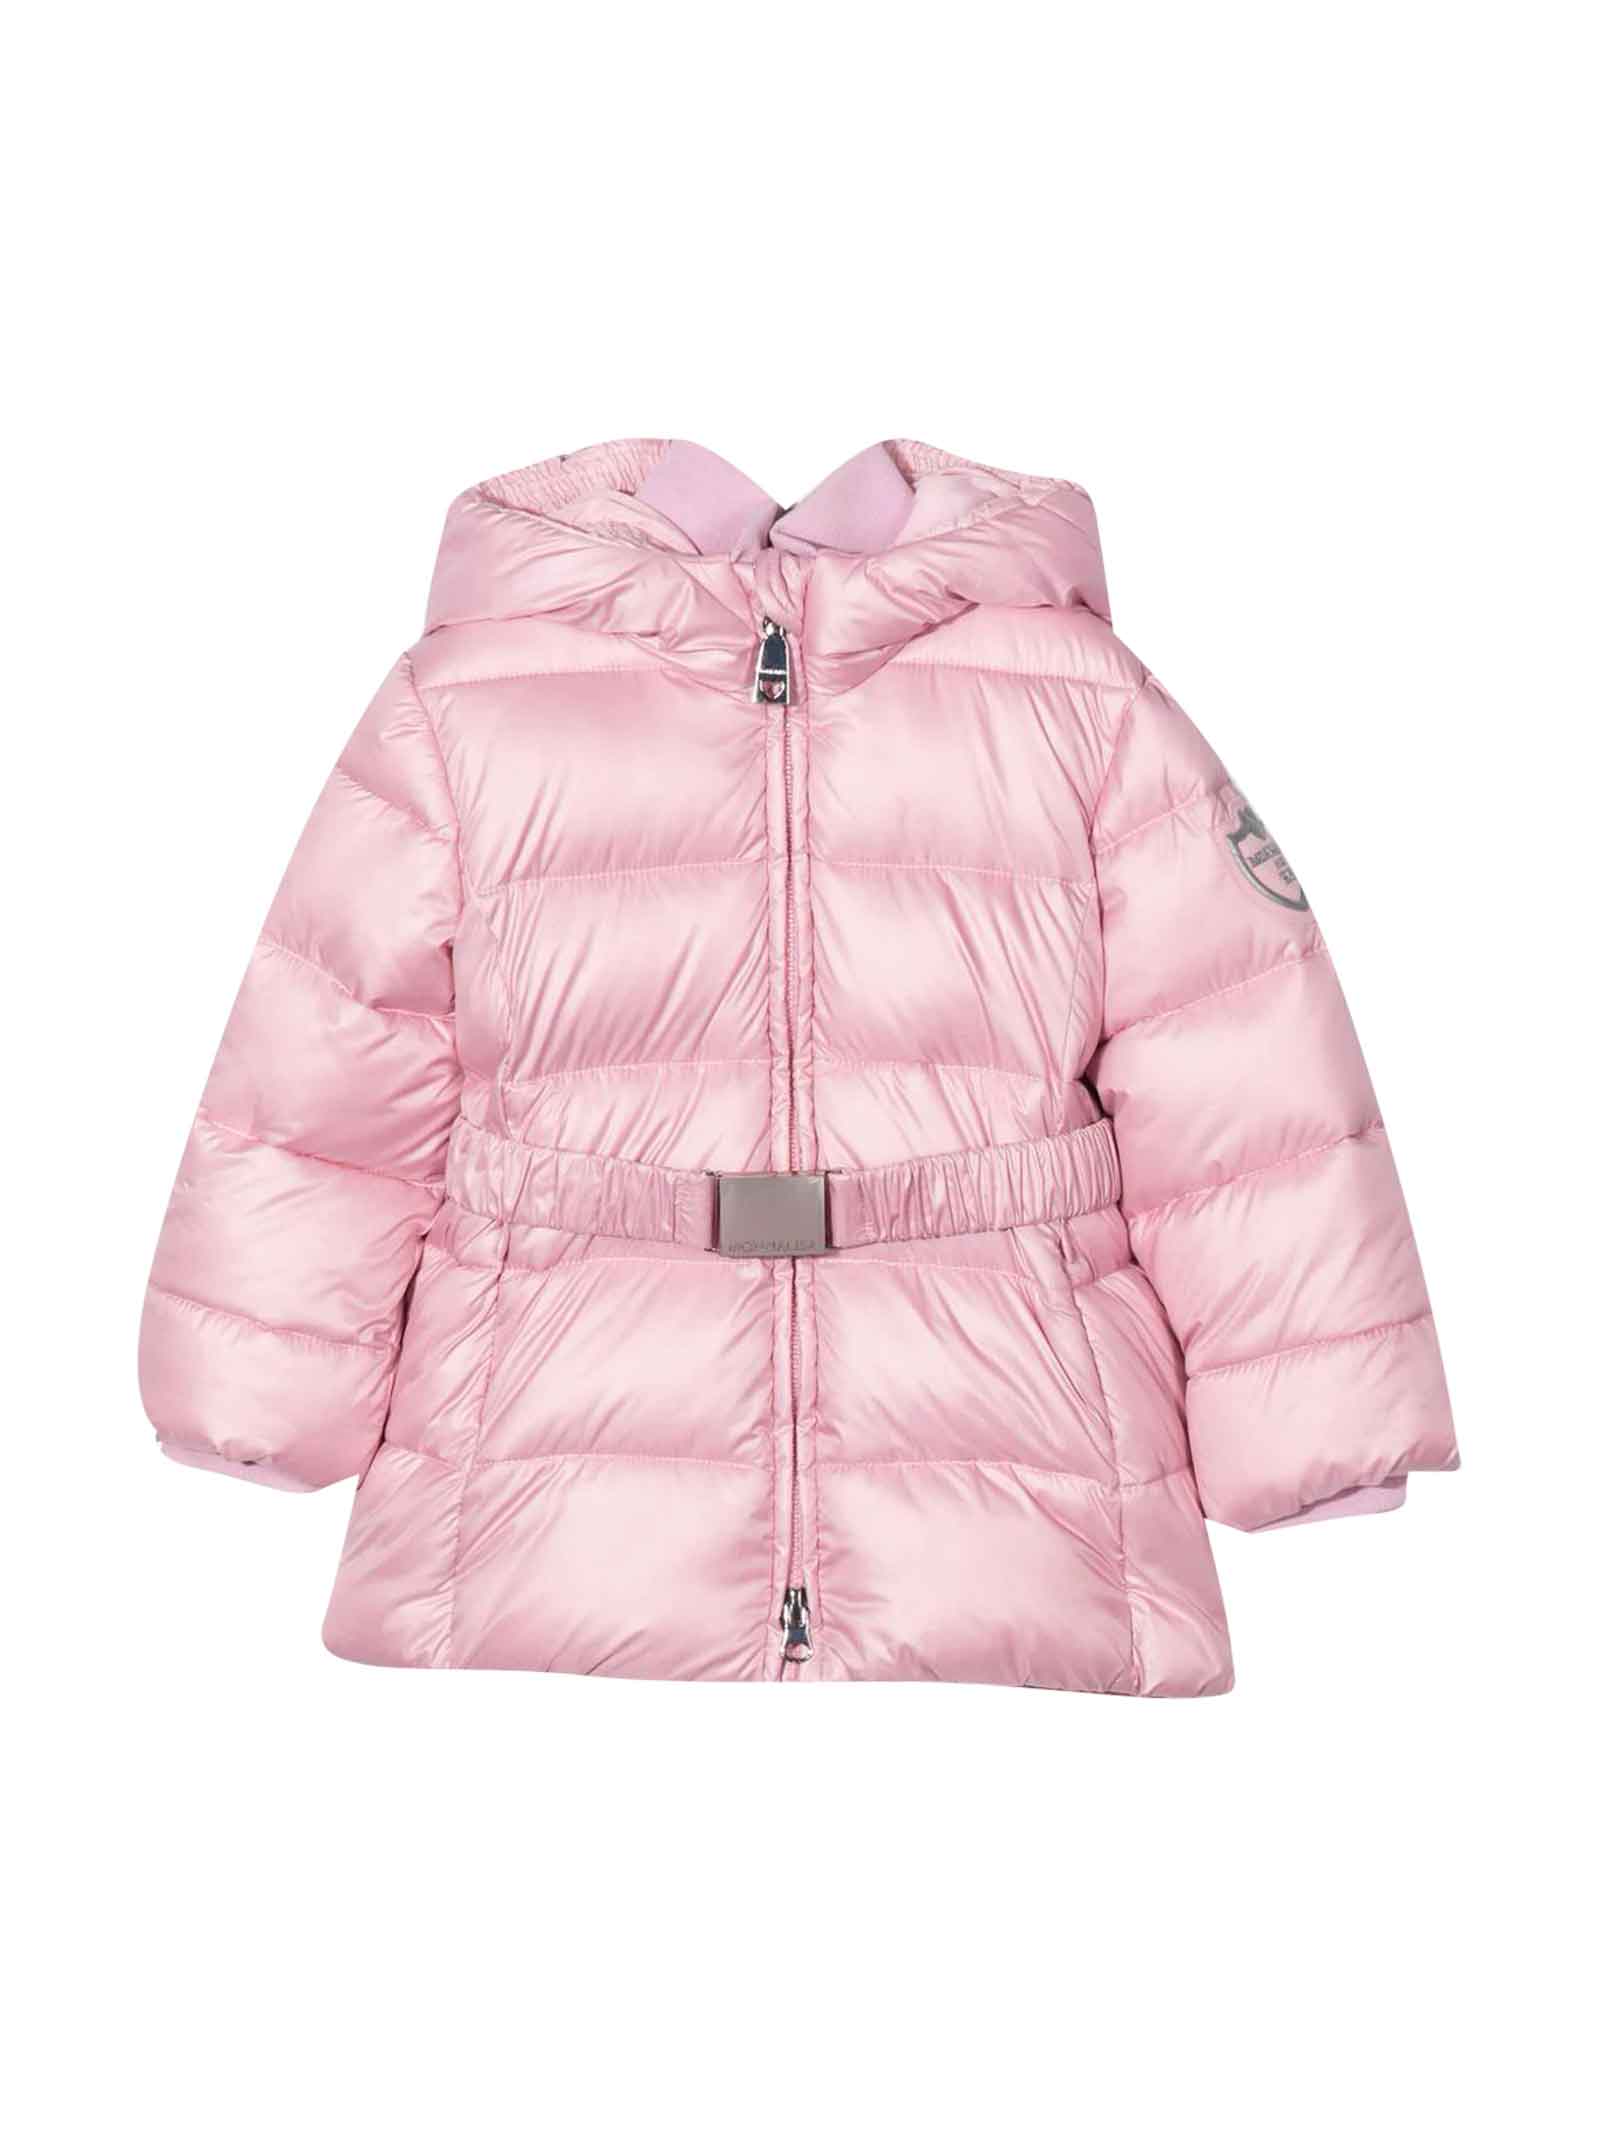 Monnalisa Pink Jacket Baby Girl